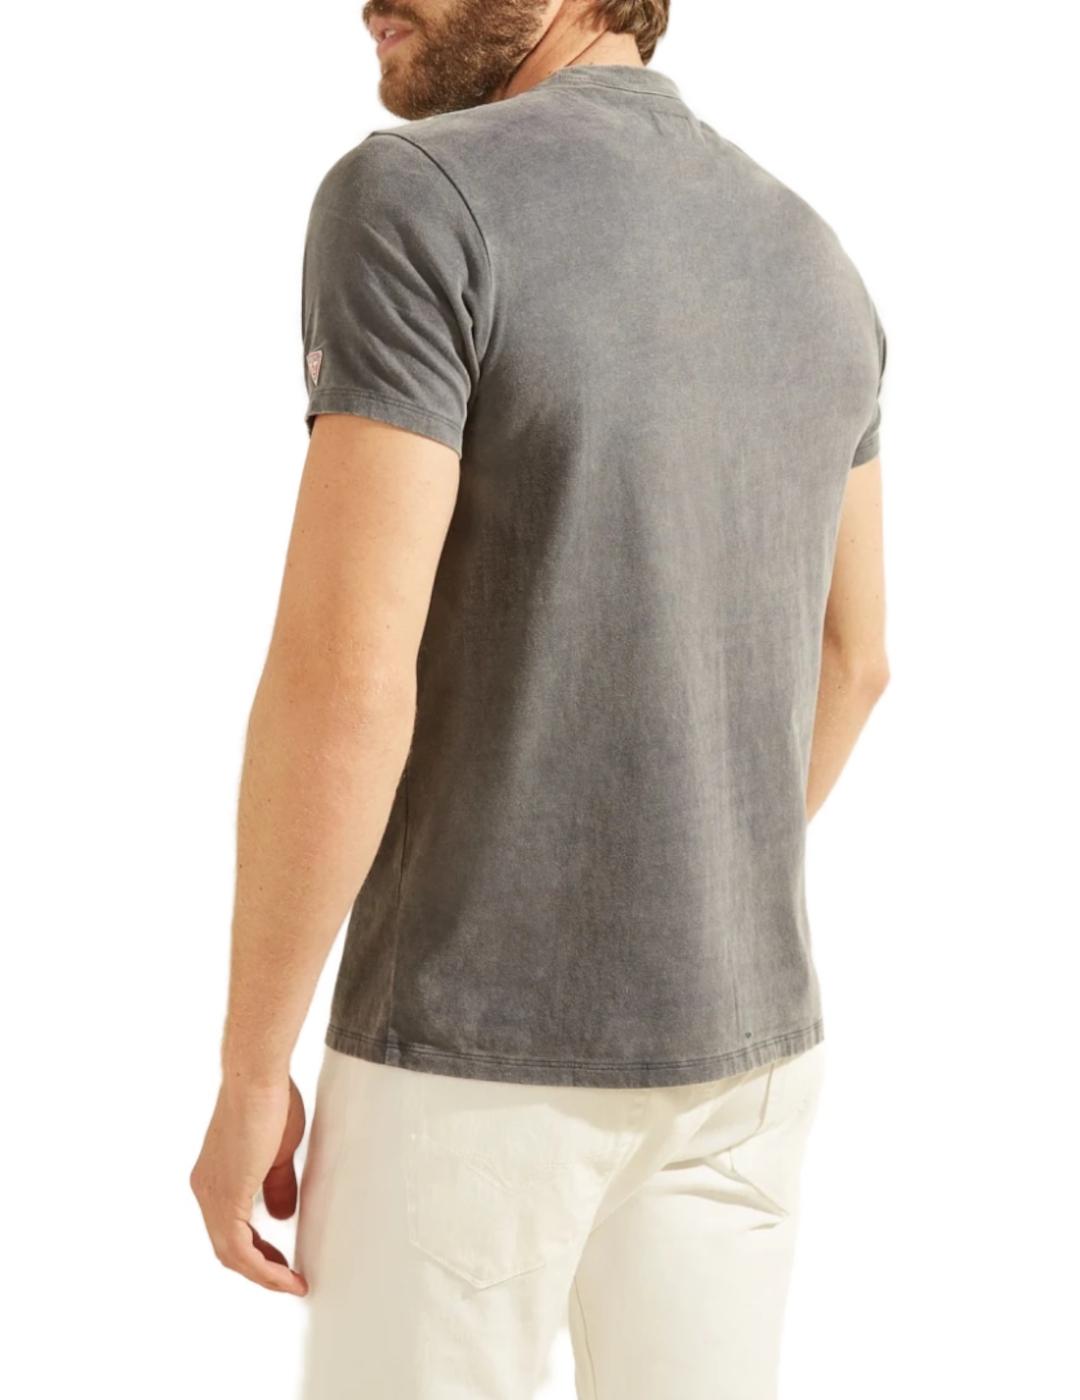 Camiseta Guess SS sueded gris para hombre-a